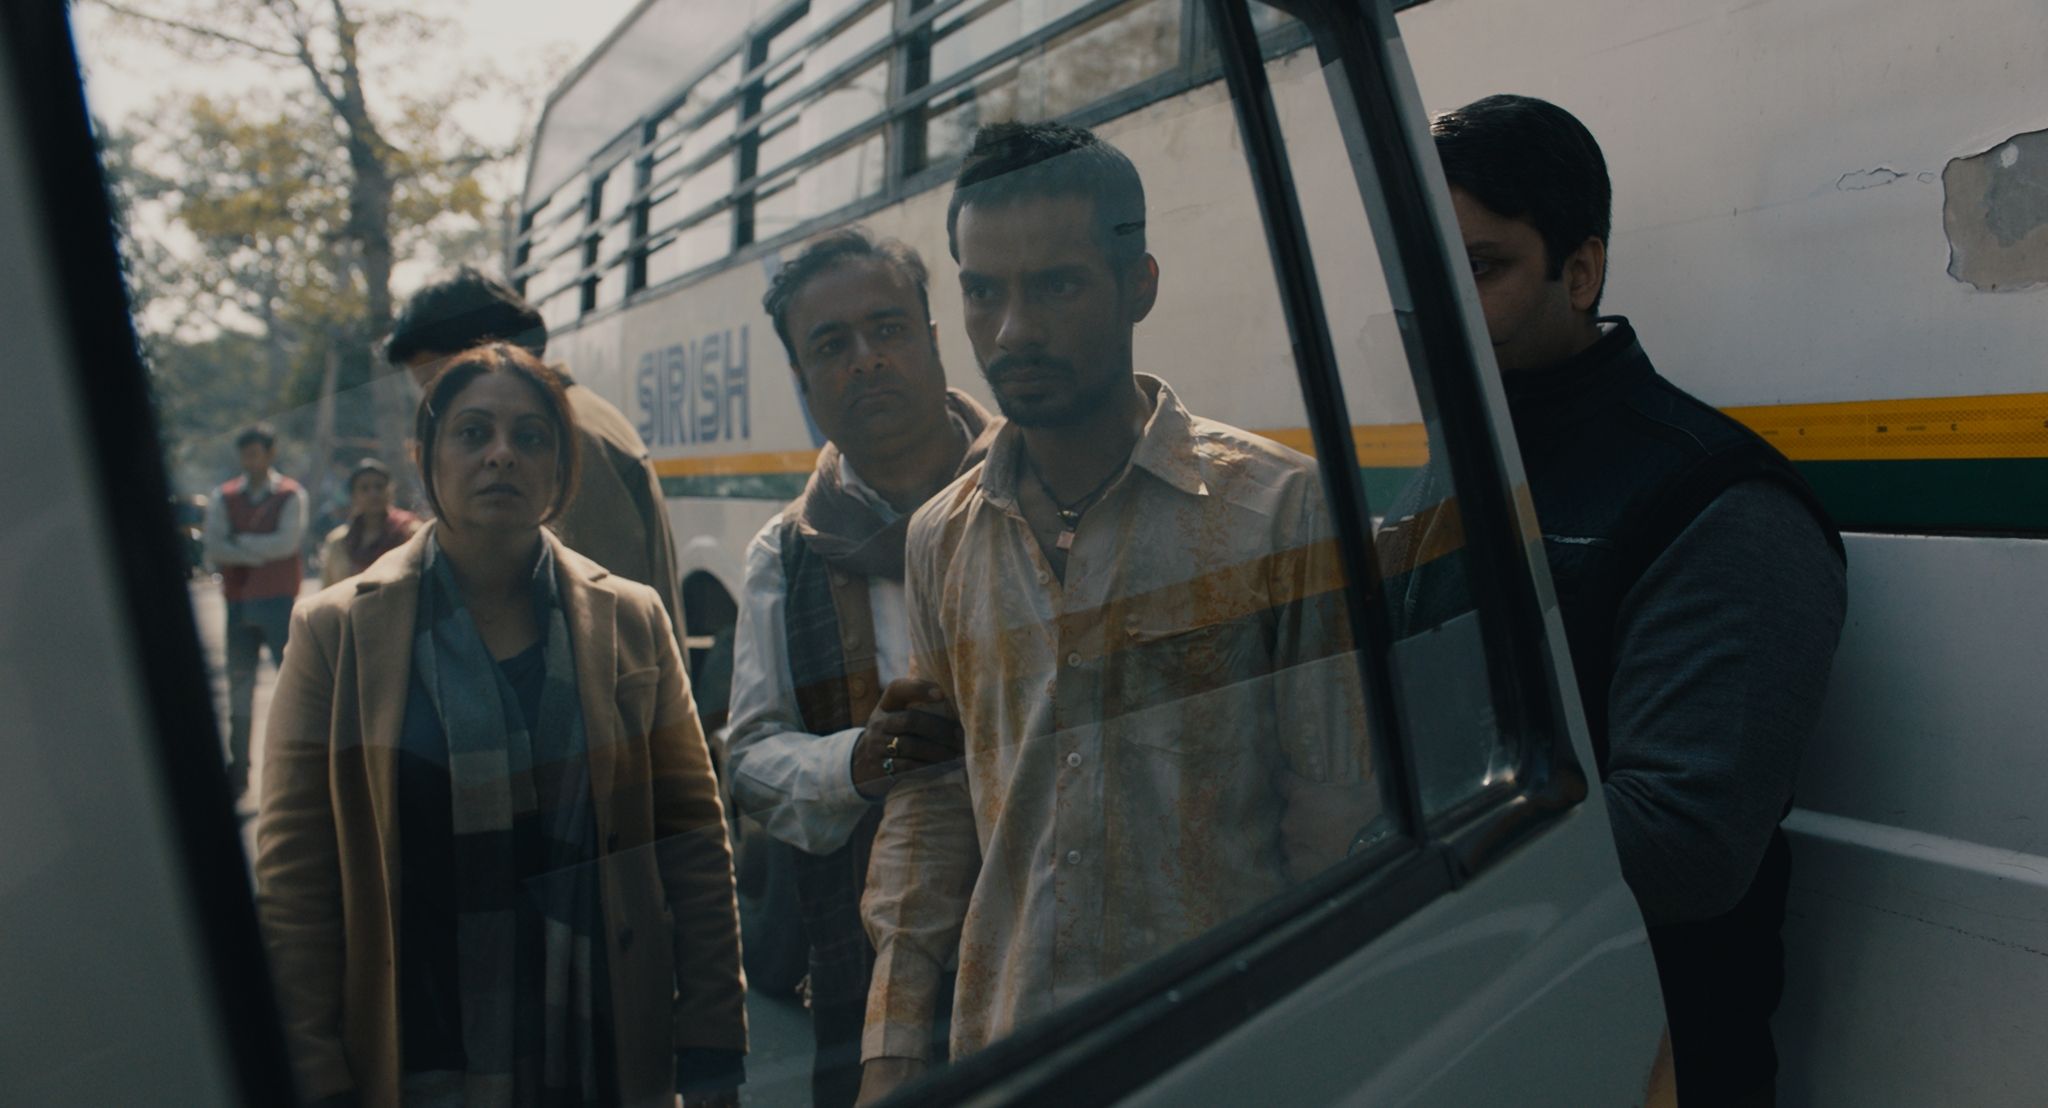 Xxx Forced Bus Rape - The True Story Behind Netflix's 'Delhi Crime' Is Absolutely Horrific